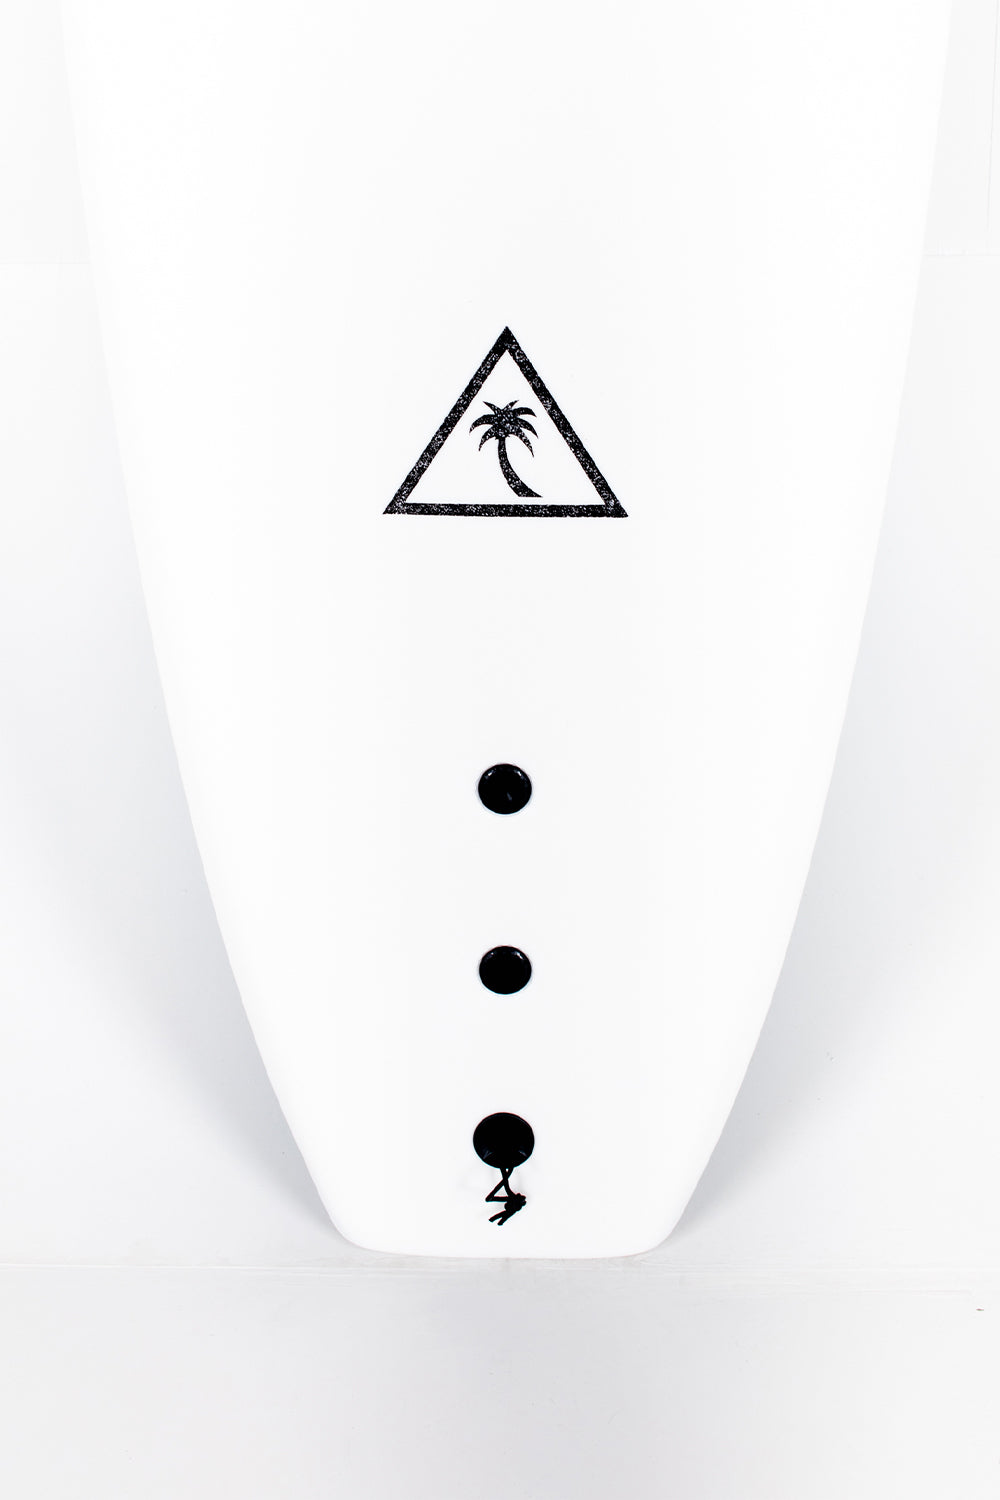 
                  
                    Pukas Surf Shop - Catch Surf - NOSERIDER SINGLE FIN White Light Blue - 8'6" x 22,90" x 3,15" x 80l.
                  
                